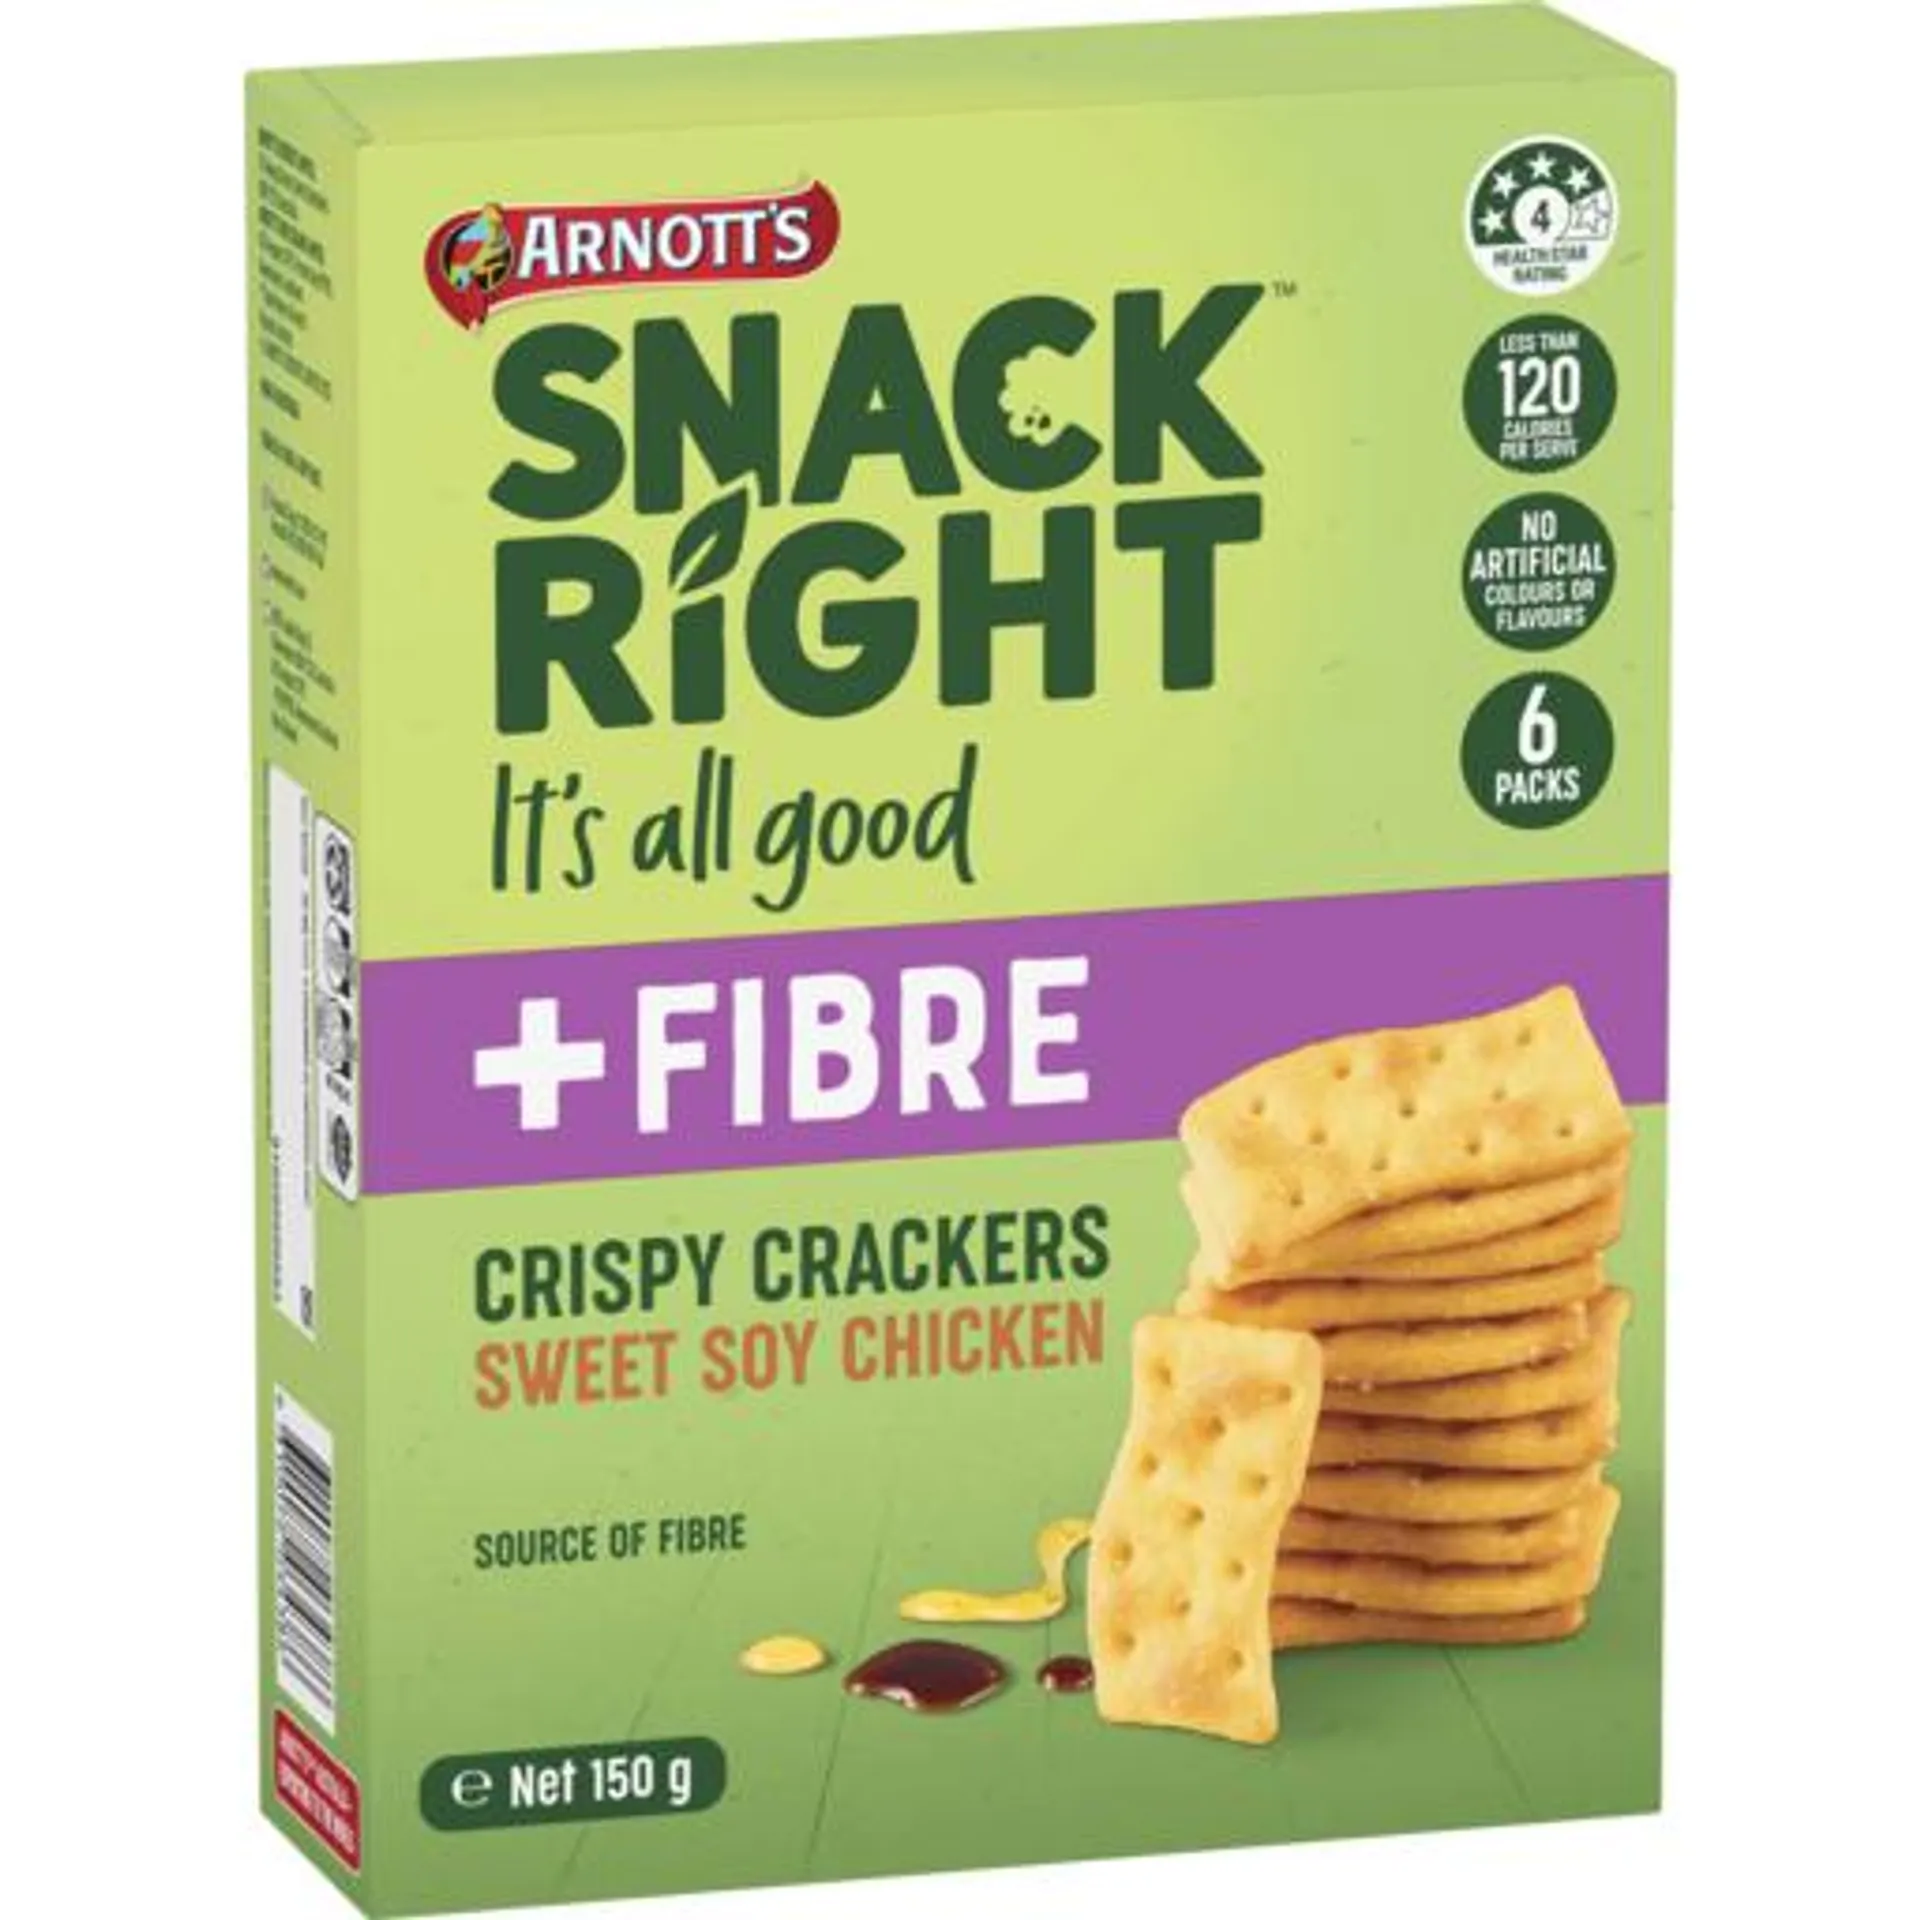 Arnotts Snack Right + Fibre Crispy Crackers Sweet Soy Chicken 6 Packs